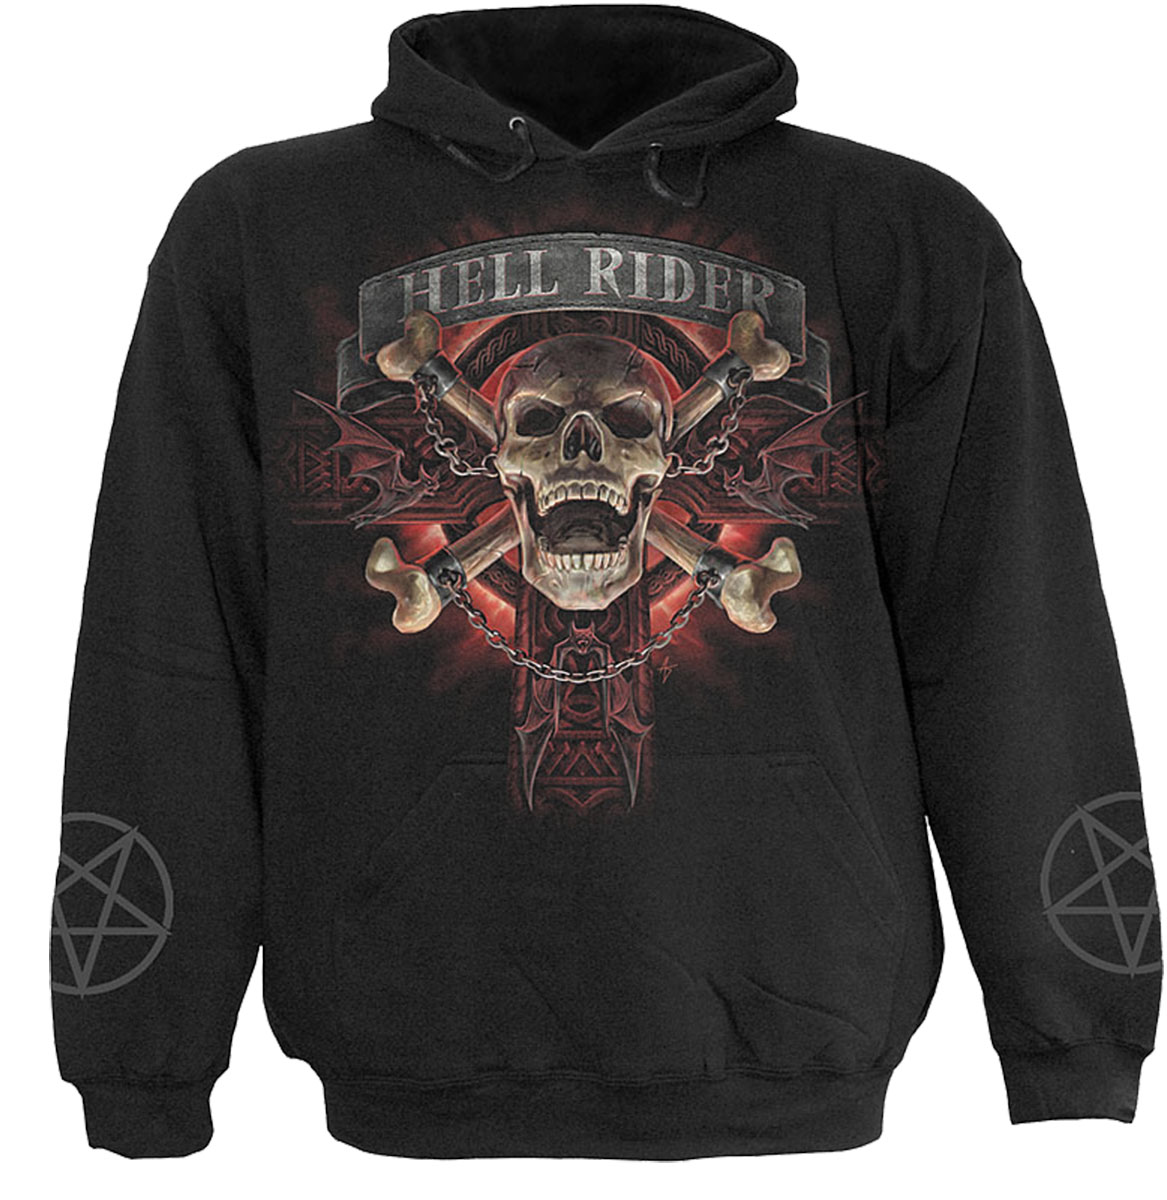 Hell Rider Kids Hoody Black (Plain)